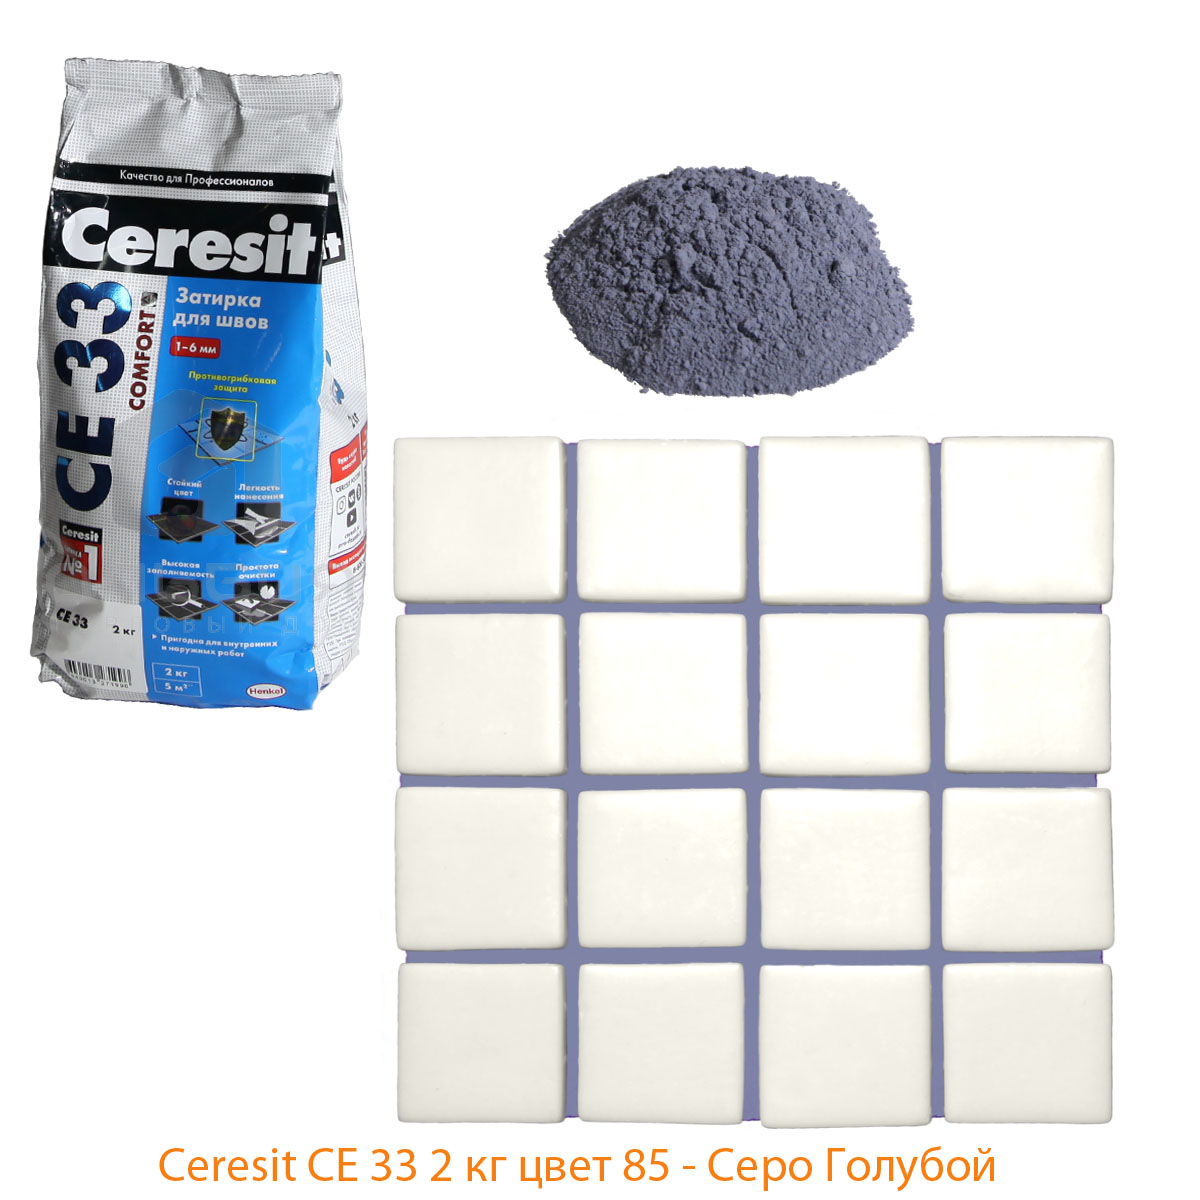 затирка для швов Ceresit CE 33 цвет 85 Серо Голубой фото цвета